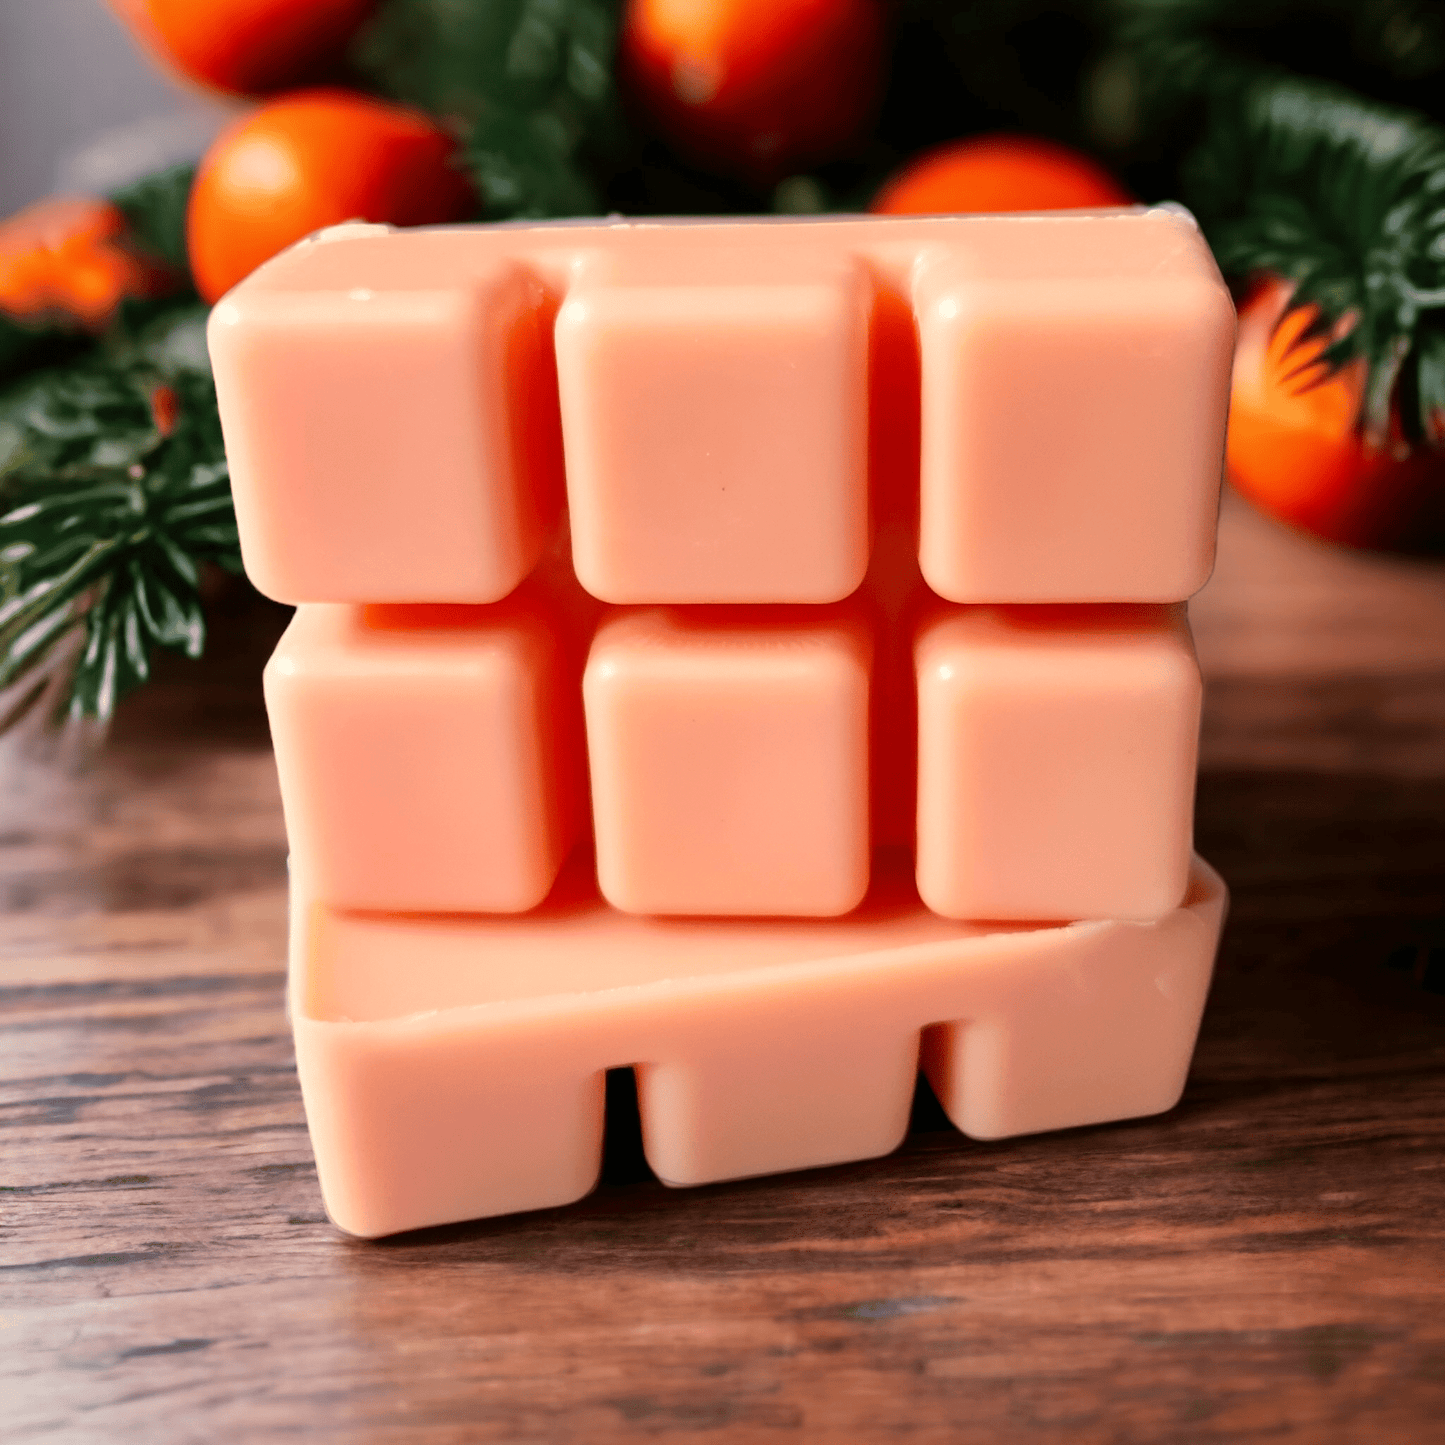 Christmas Orange - WaxettyChristmas OrangeWax Melt